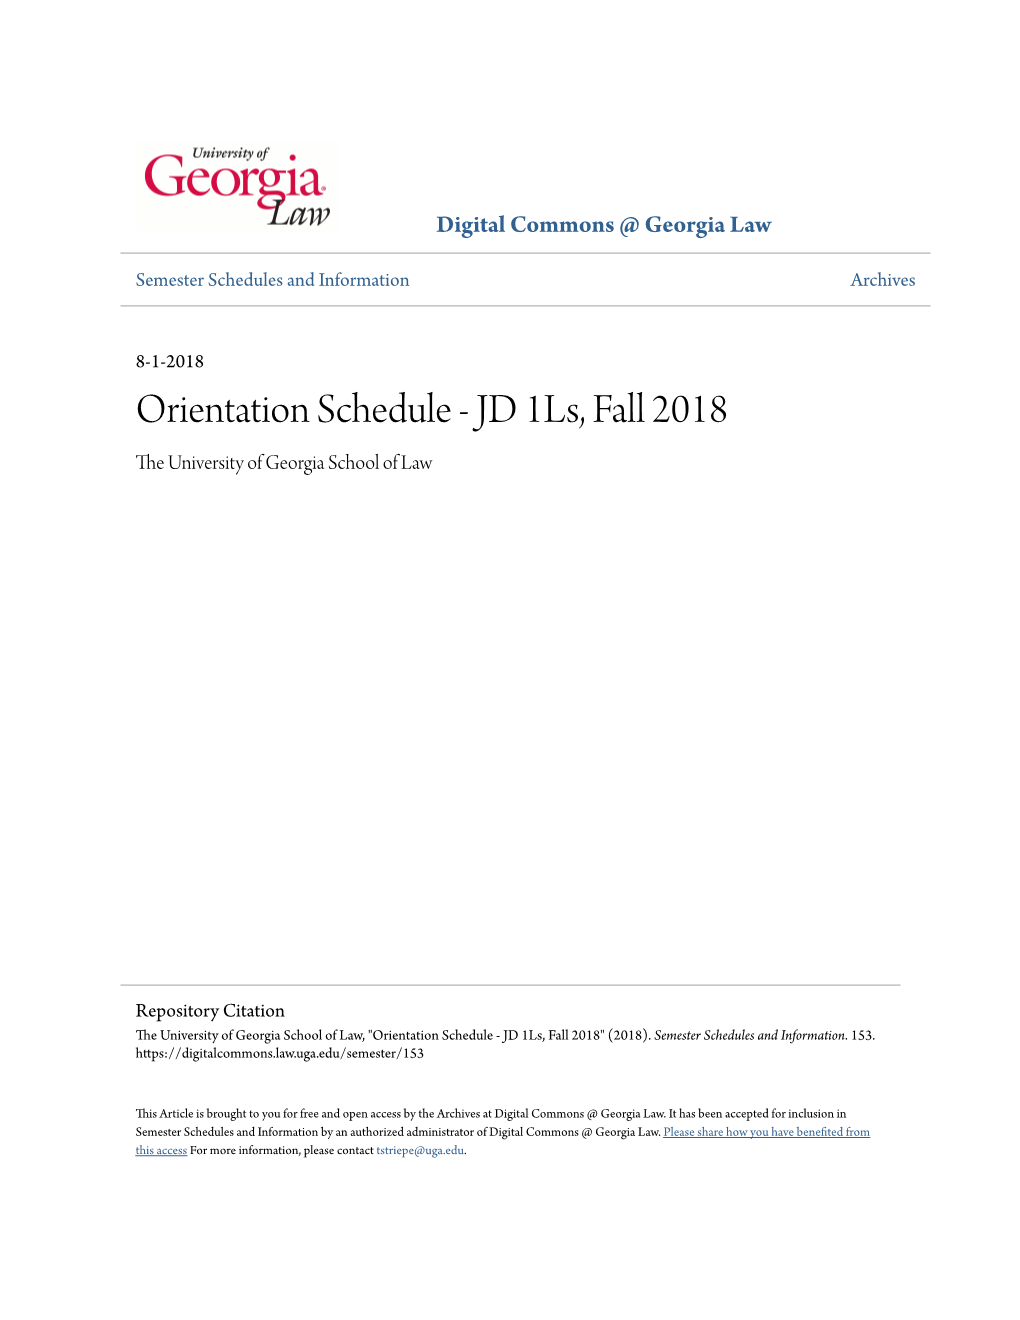 Orientation Schedule - JD 1Ls, Fall 2018 the Niu Versity of Georgia School of Law